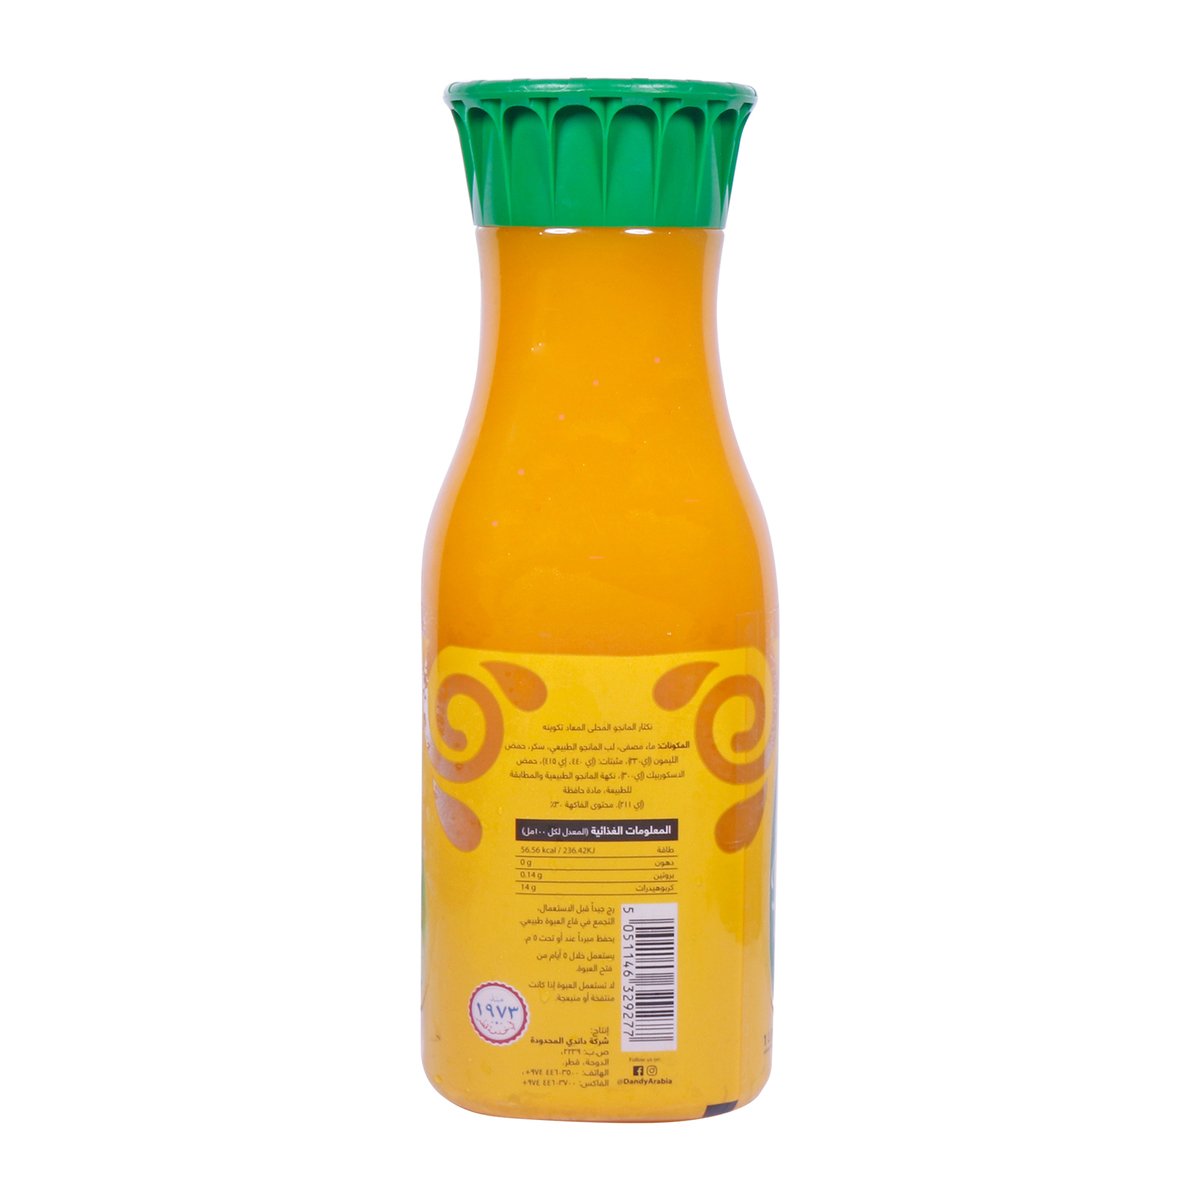 Dandy Mango Nectar Juice 1Litre